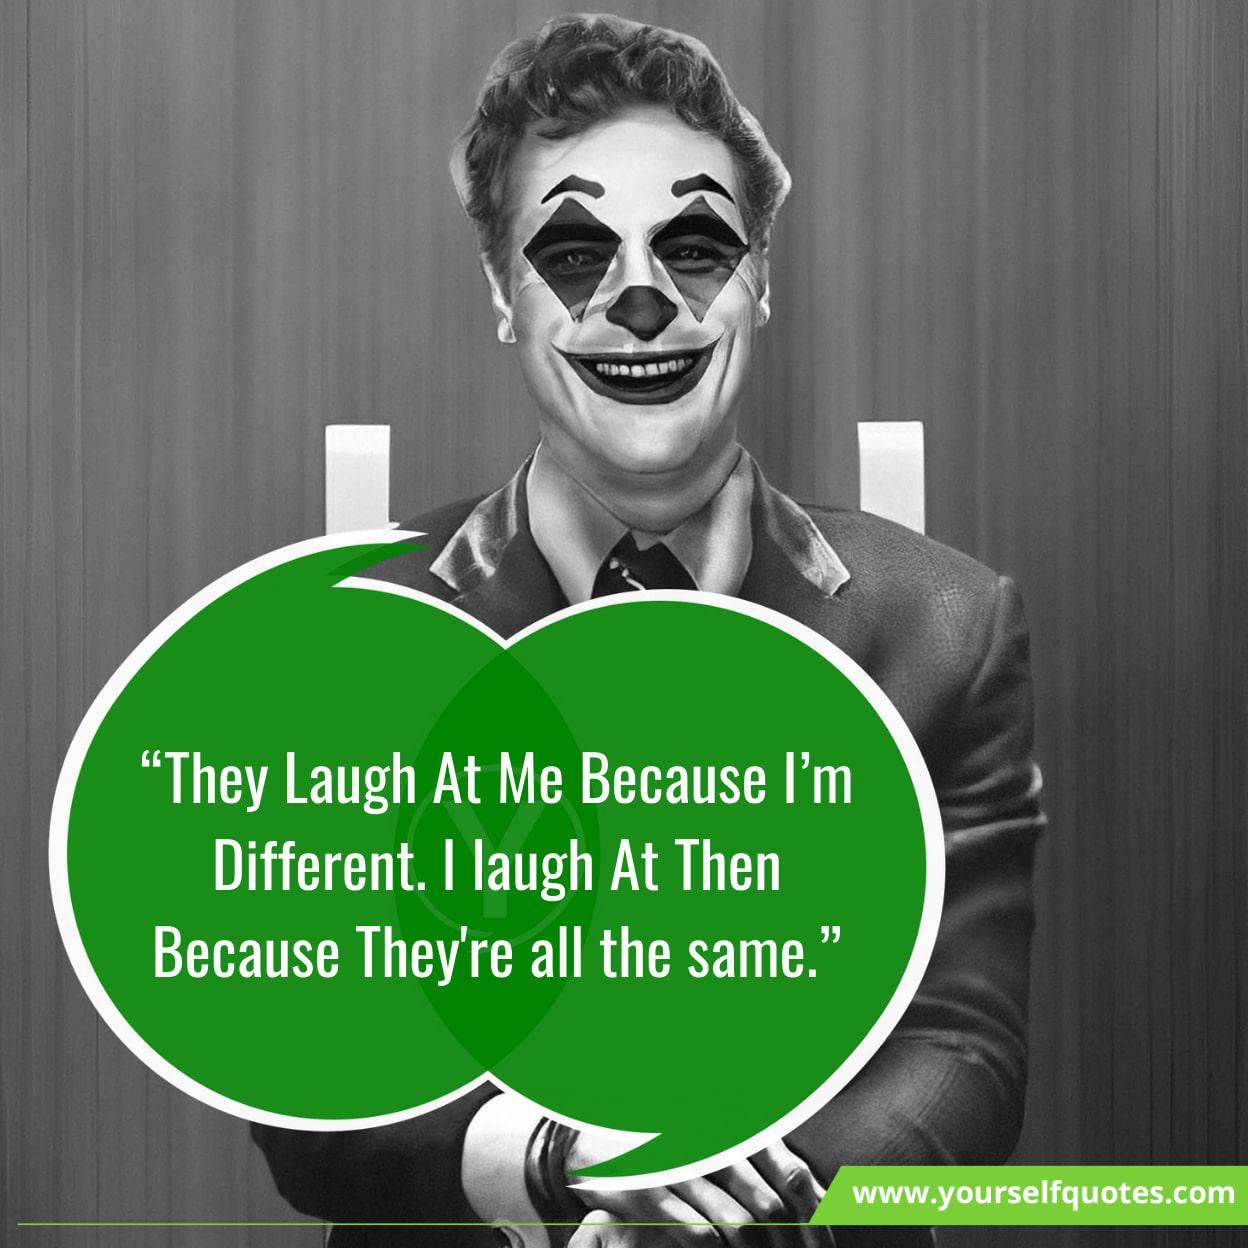 Quotes On Joker Photos